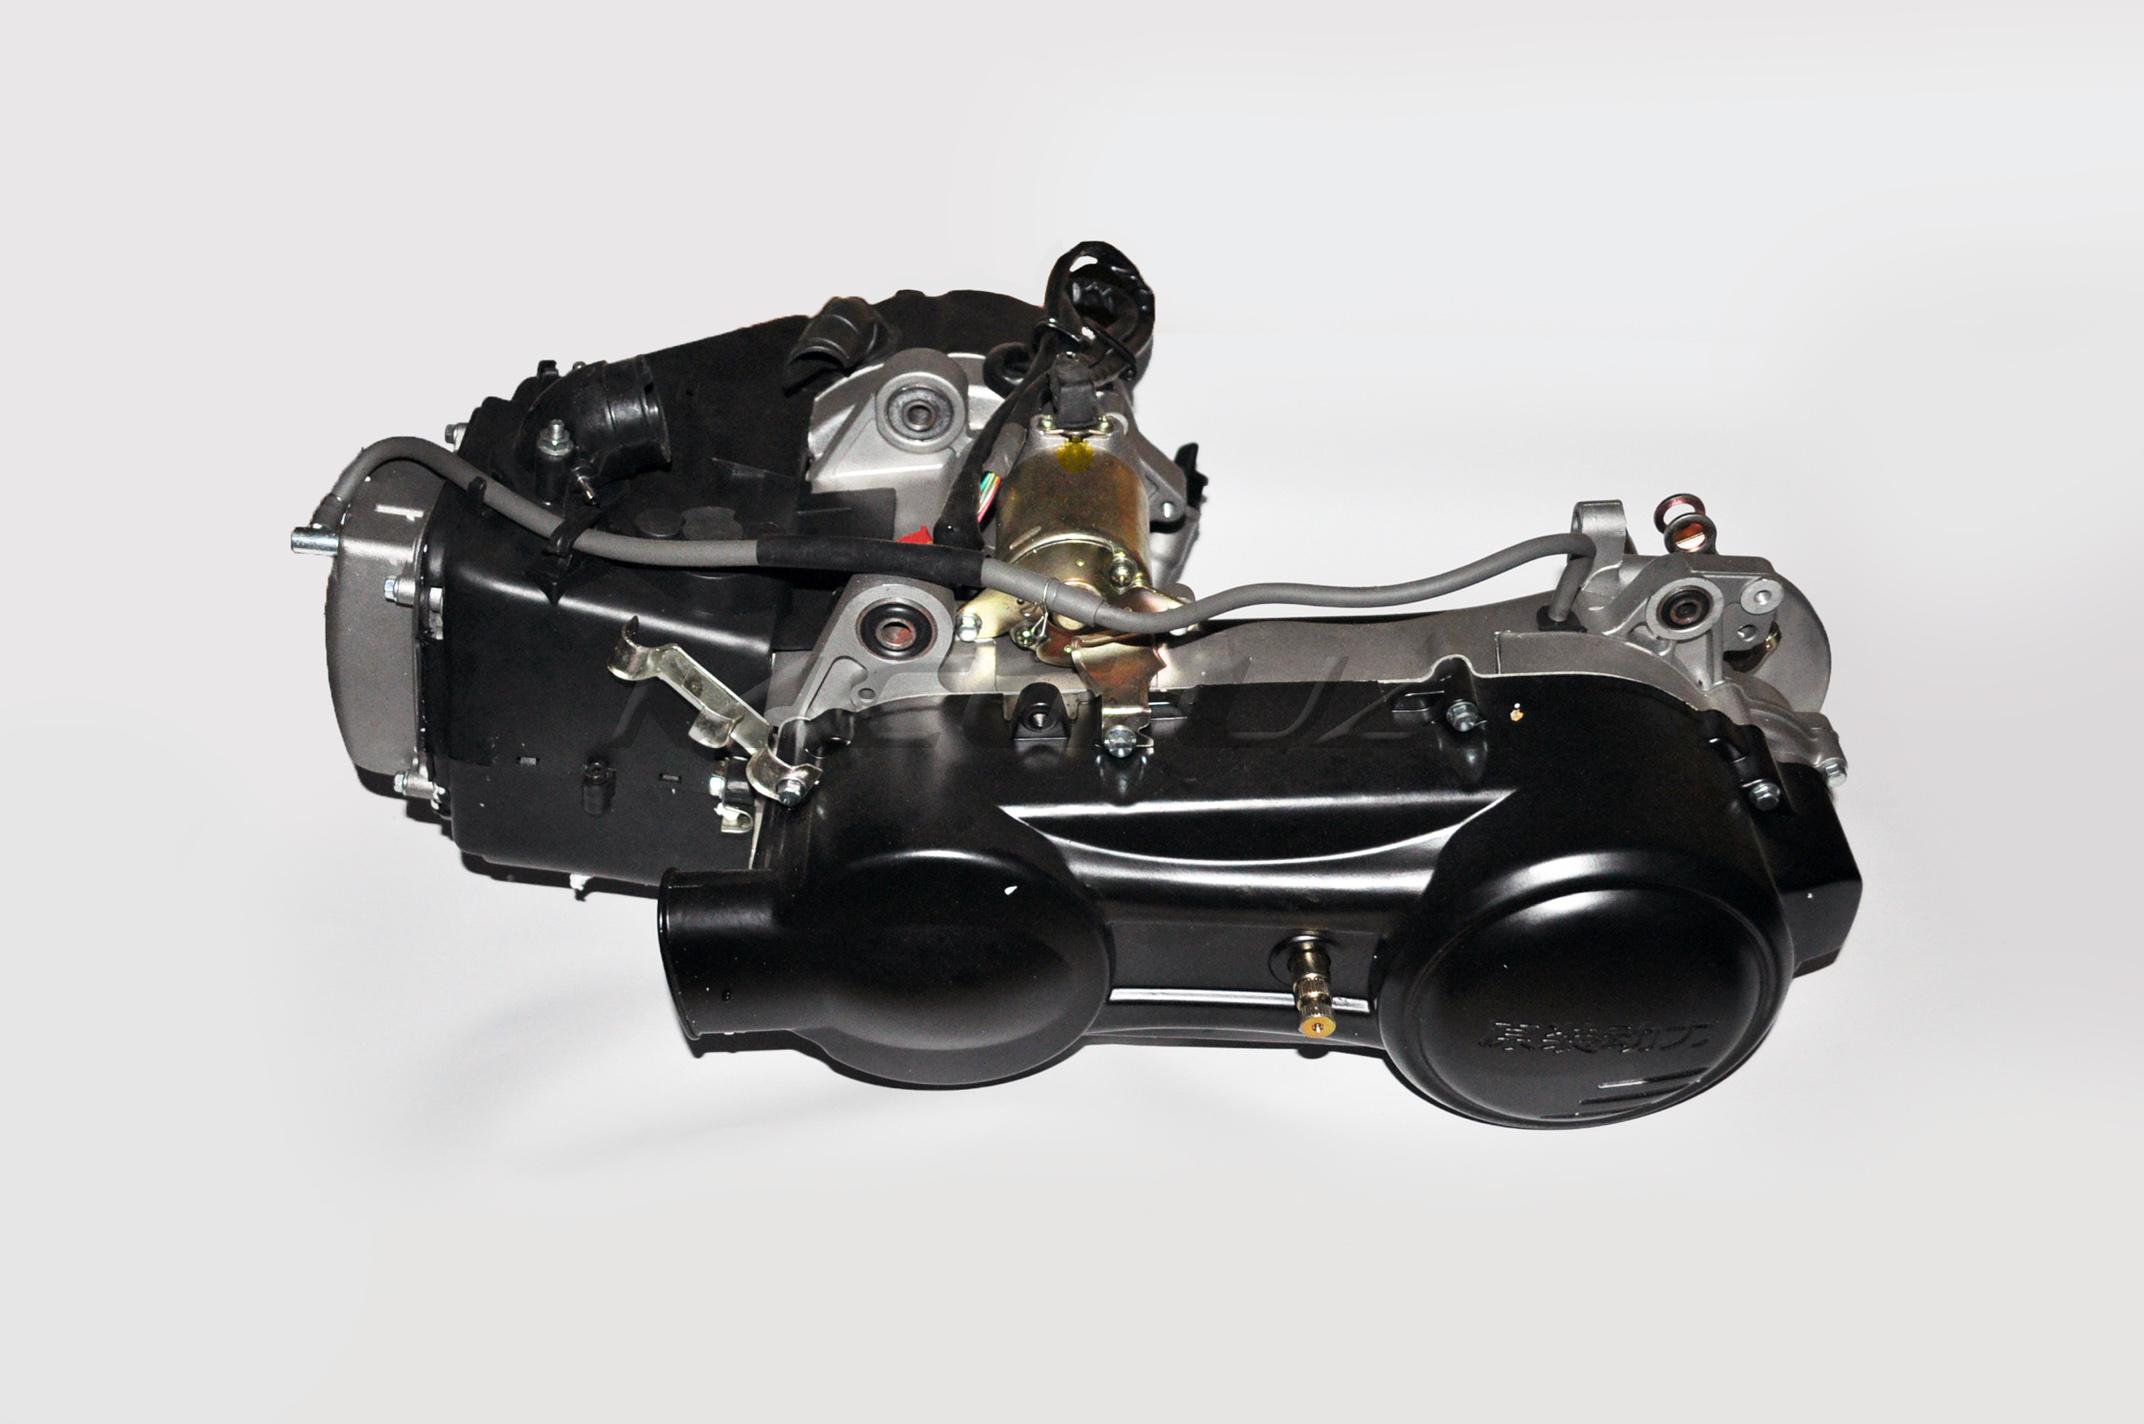 Двигатель 4T GY6 125cc (152QMI) (12